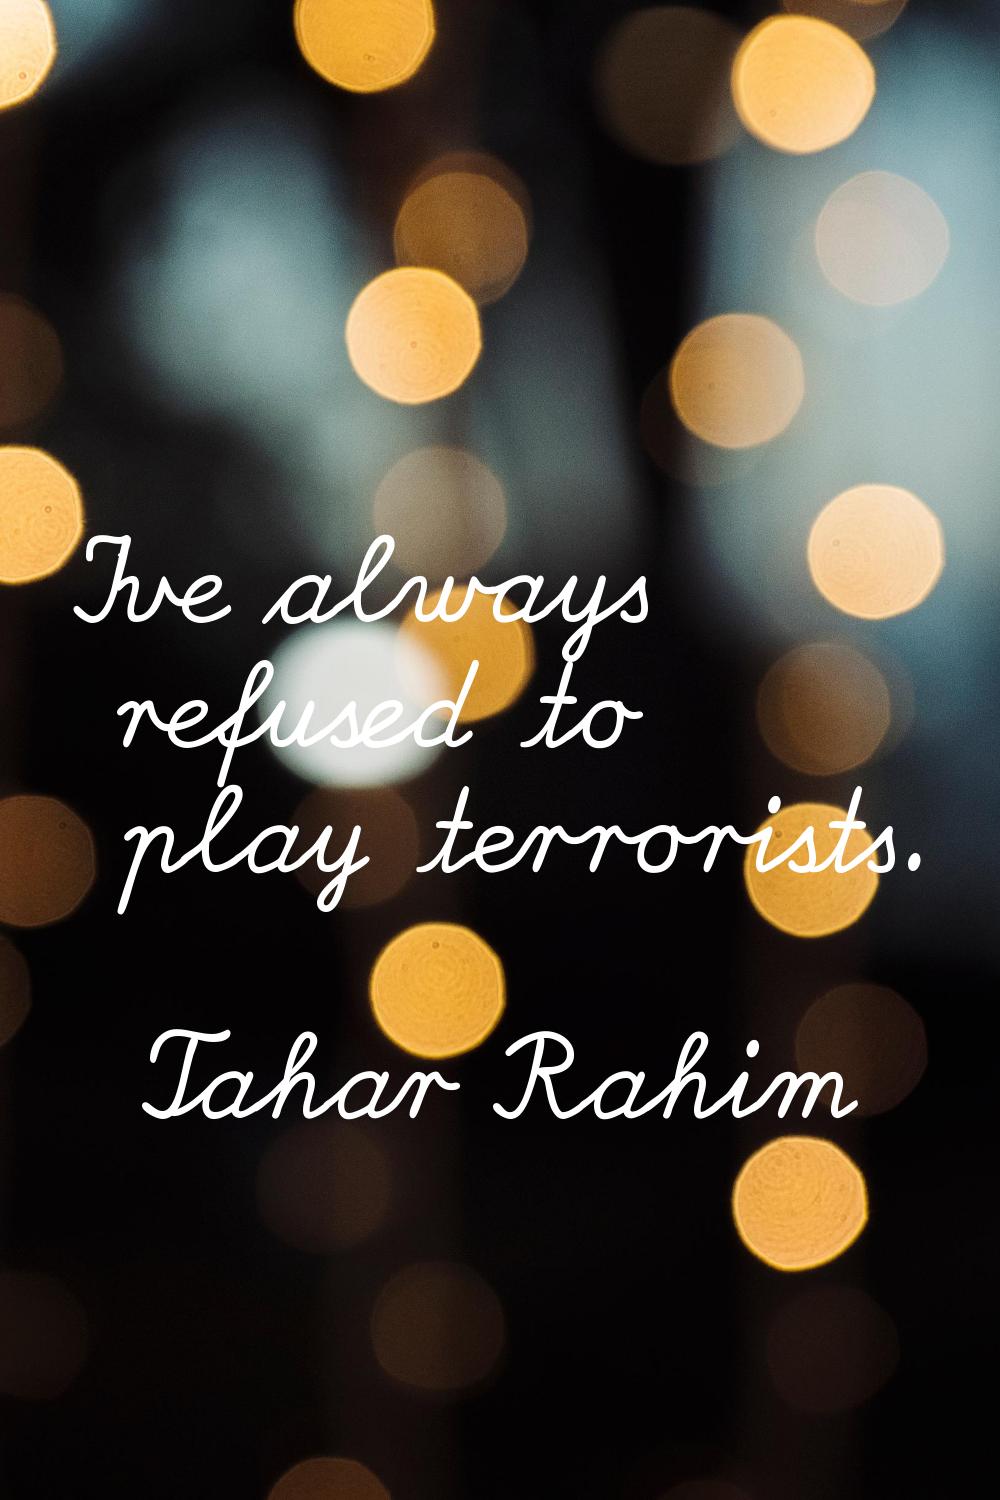 I've always refused to play terrorists.